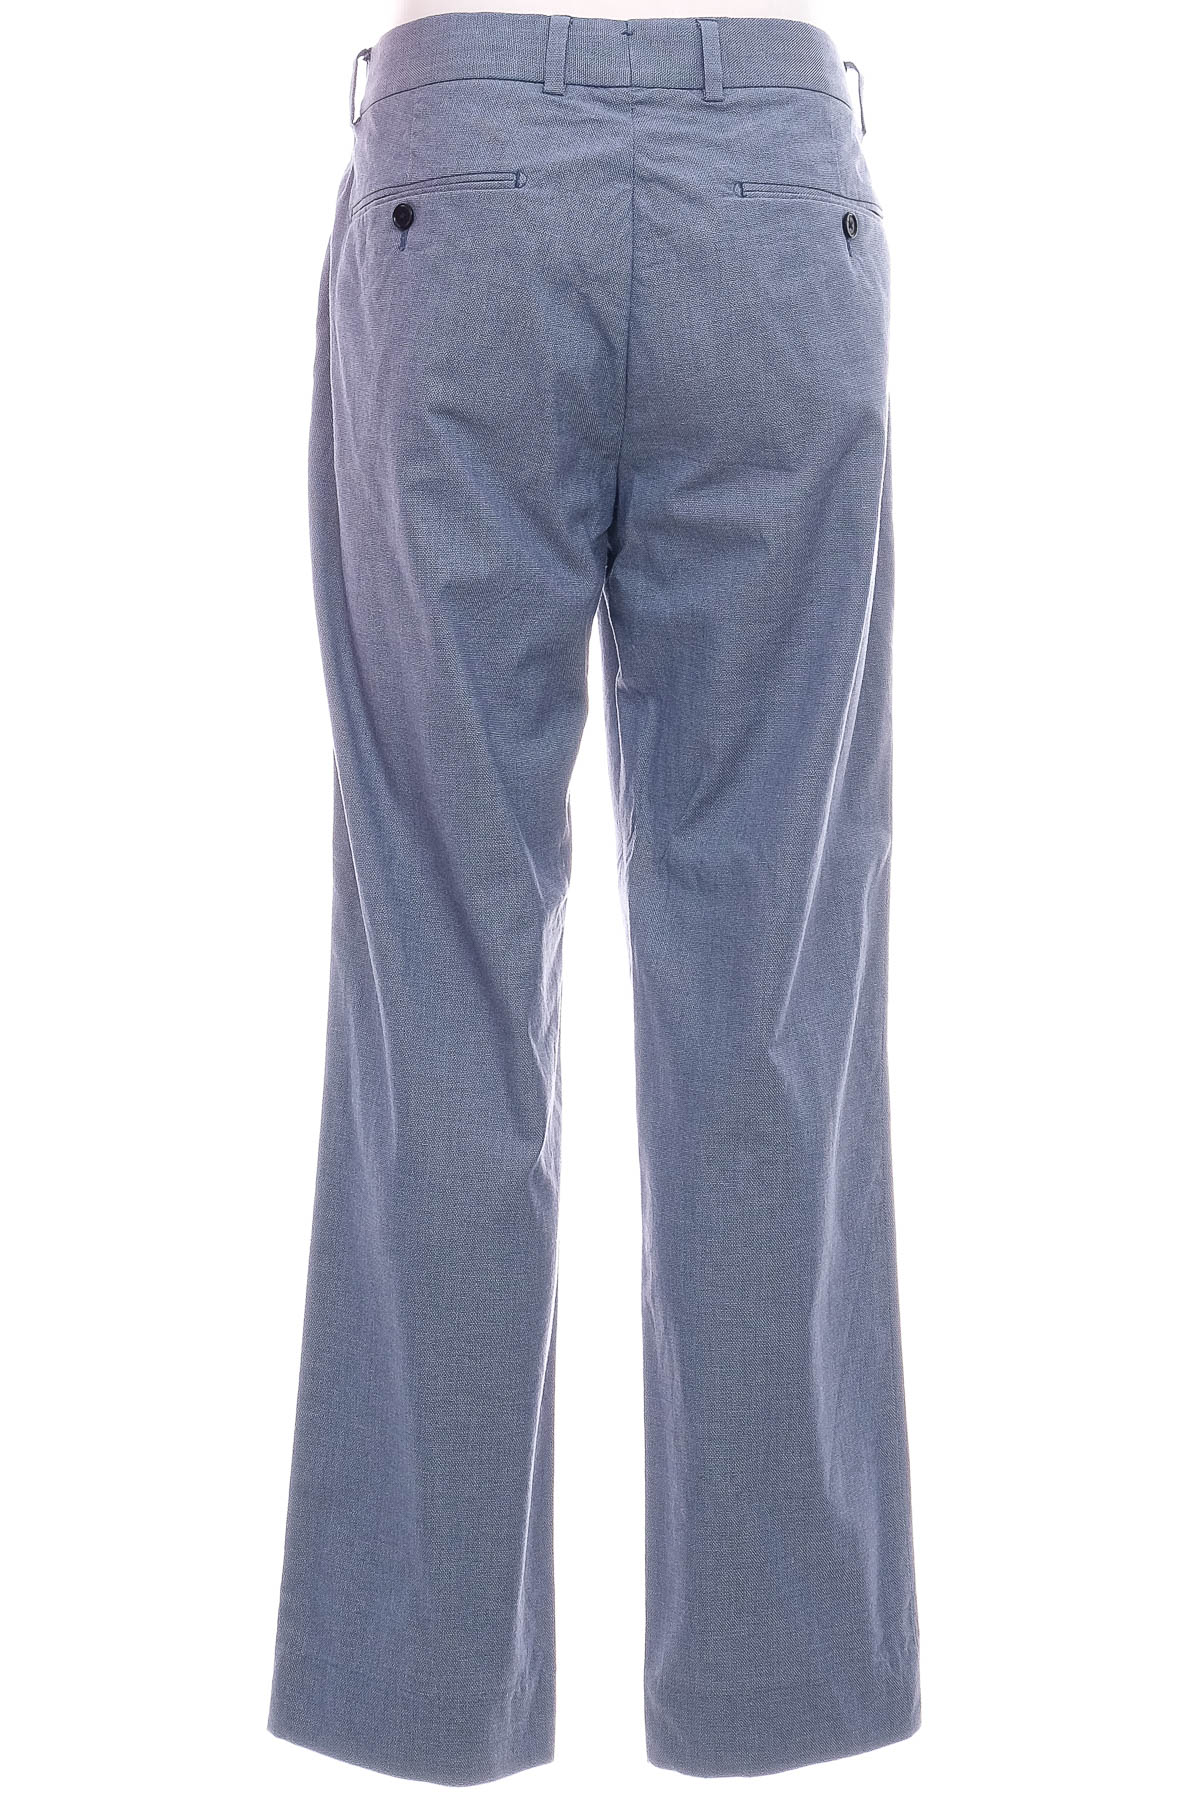 Men's trousers - SABA - 1